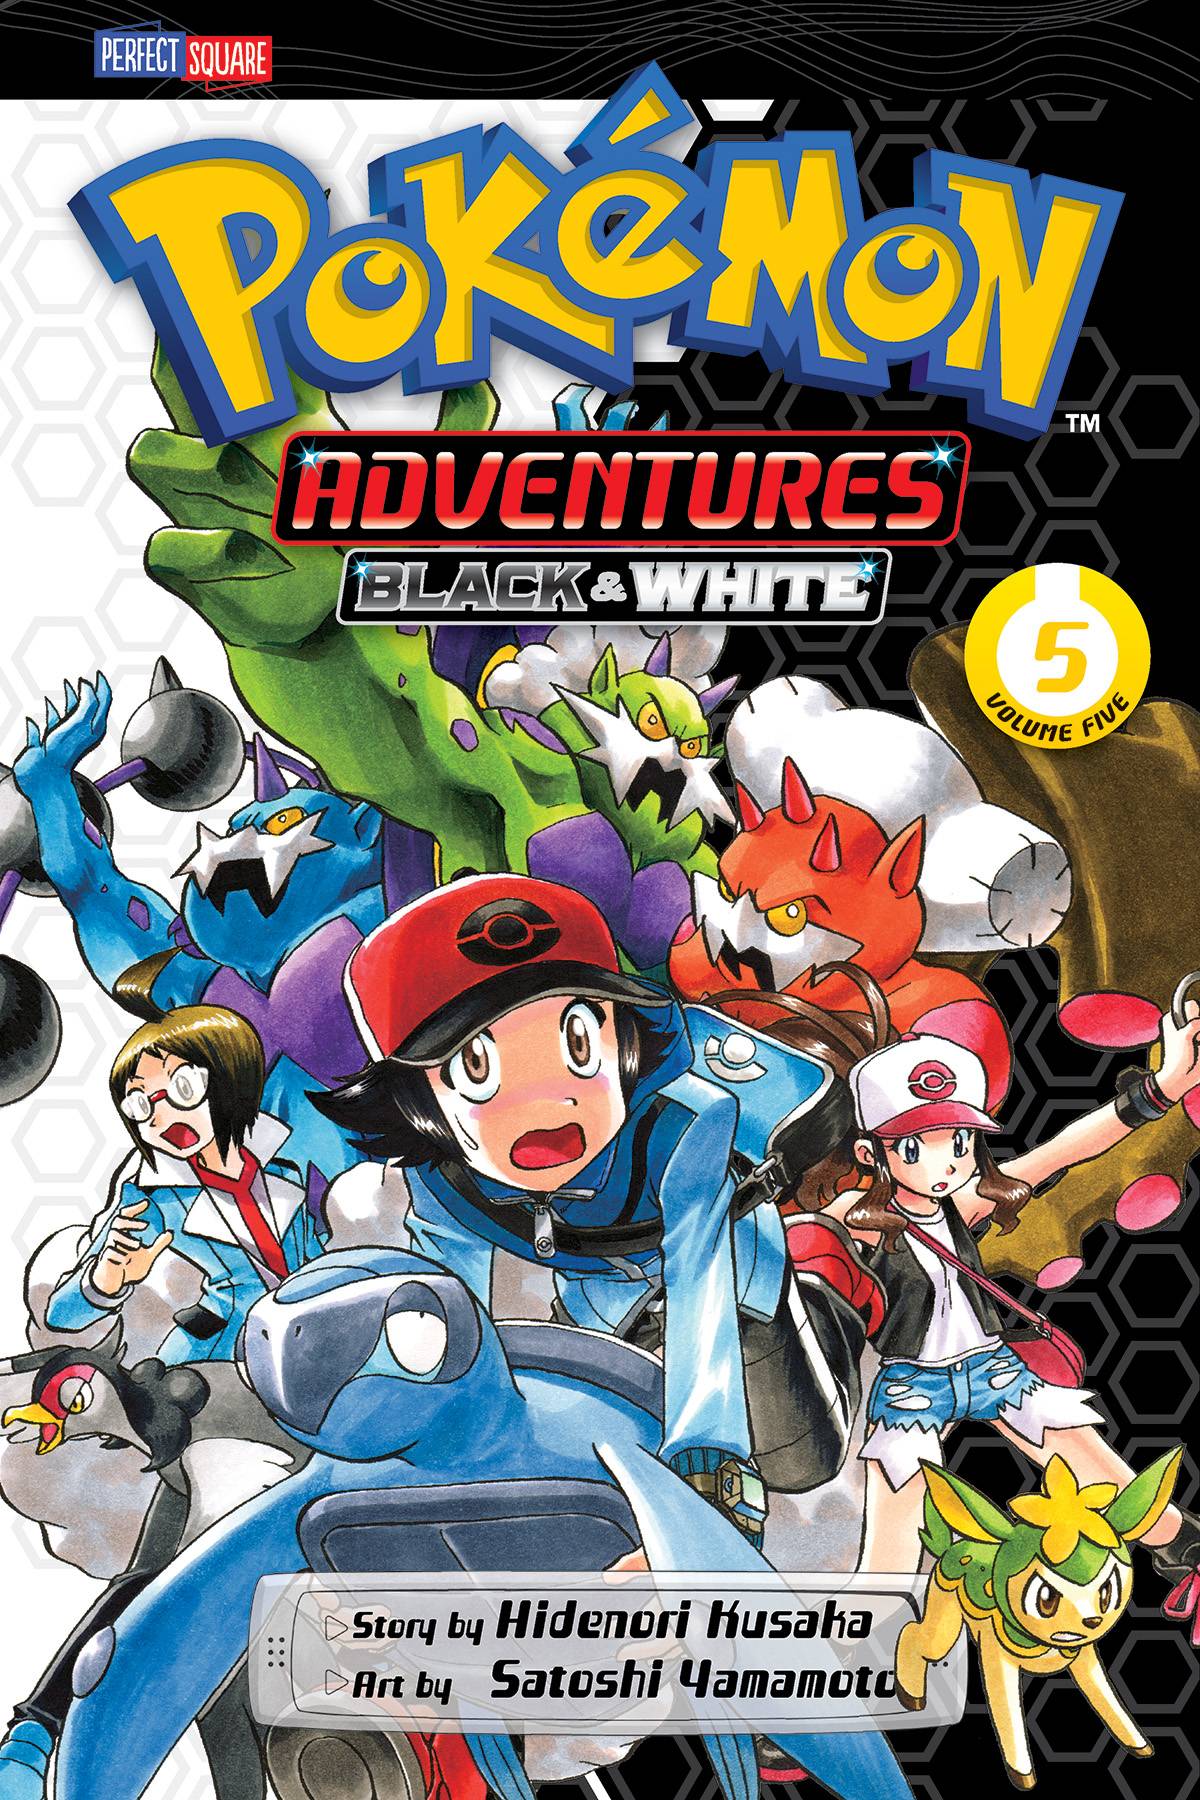 Pokémon Adventure Black & White Manga Volume 5